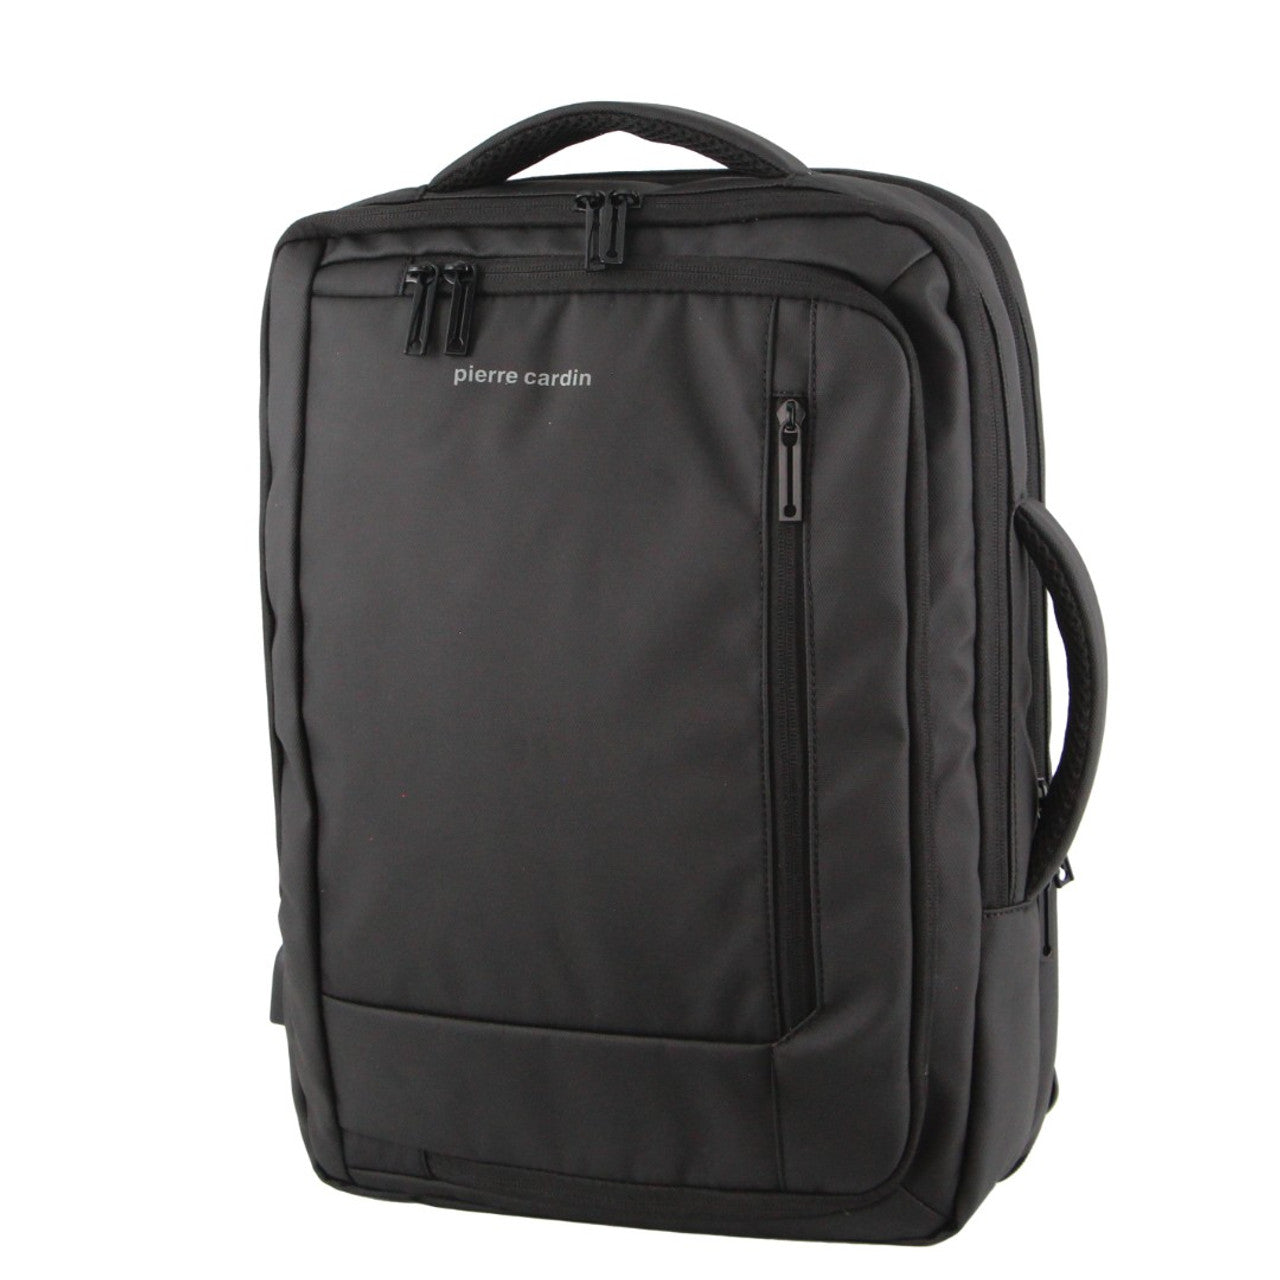 Pierre Cardin -PC3623 Top & Side handle 15in Laptop backpack w USB port - Grey *DC-1